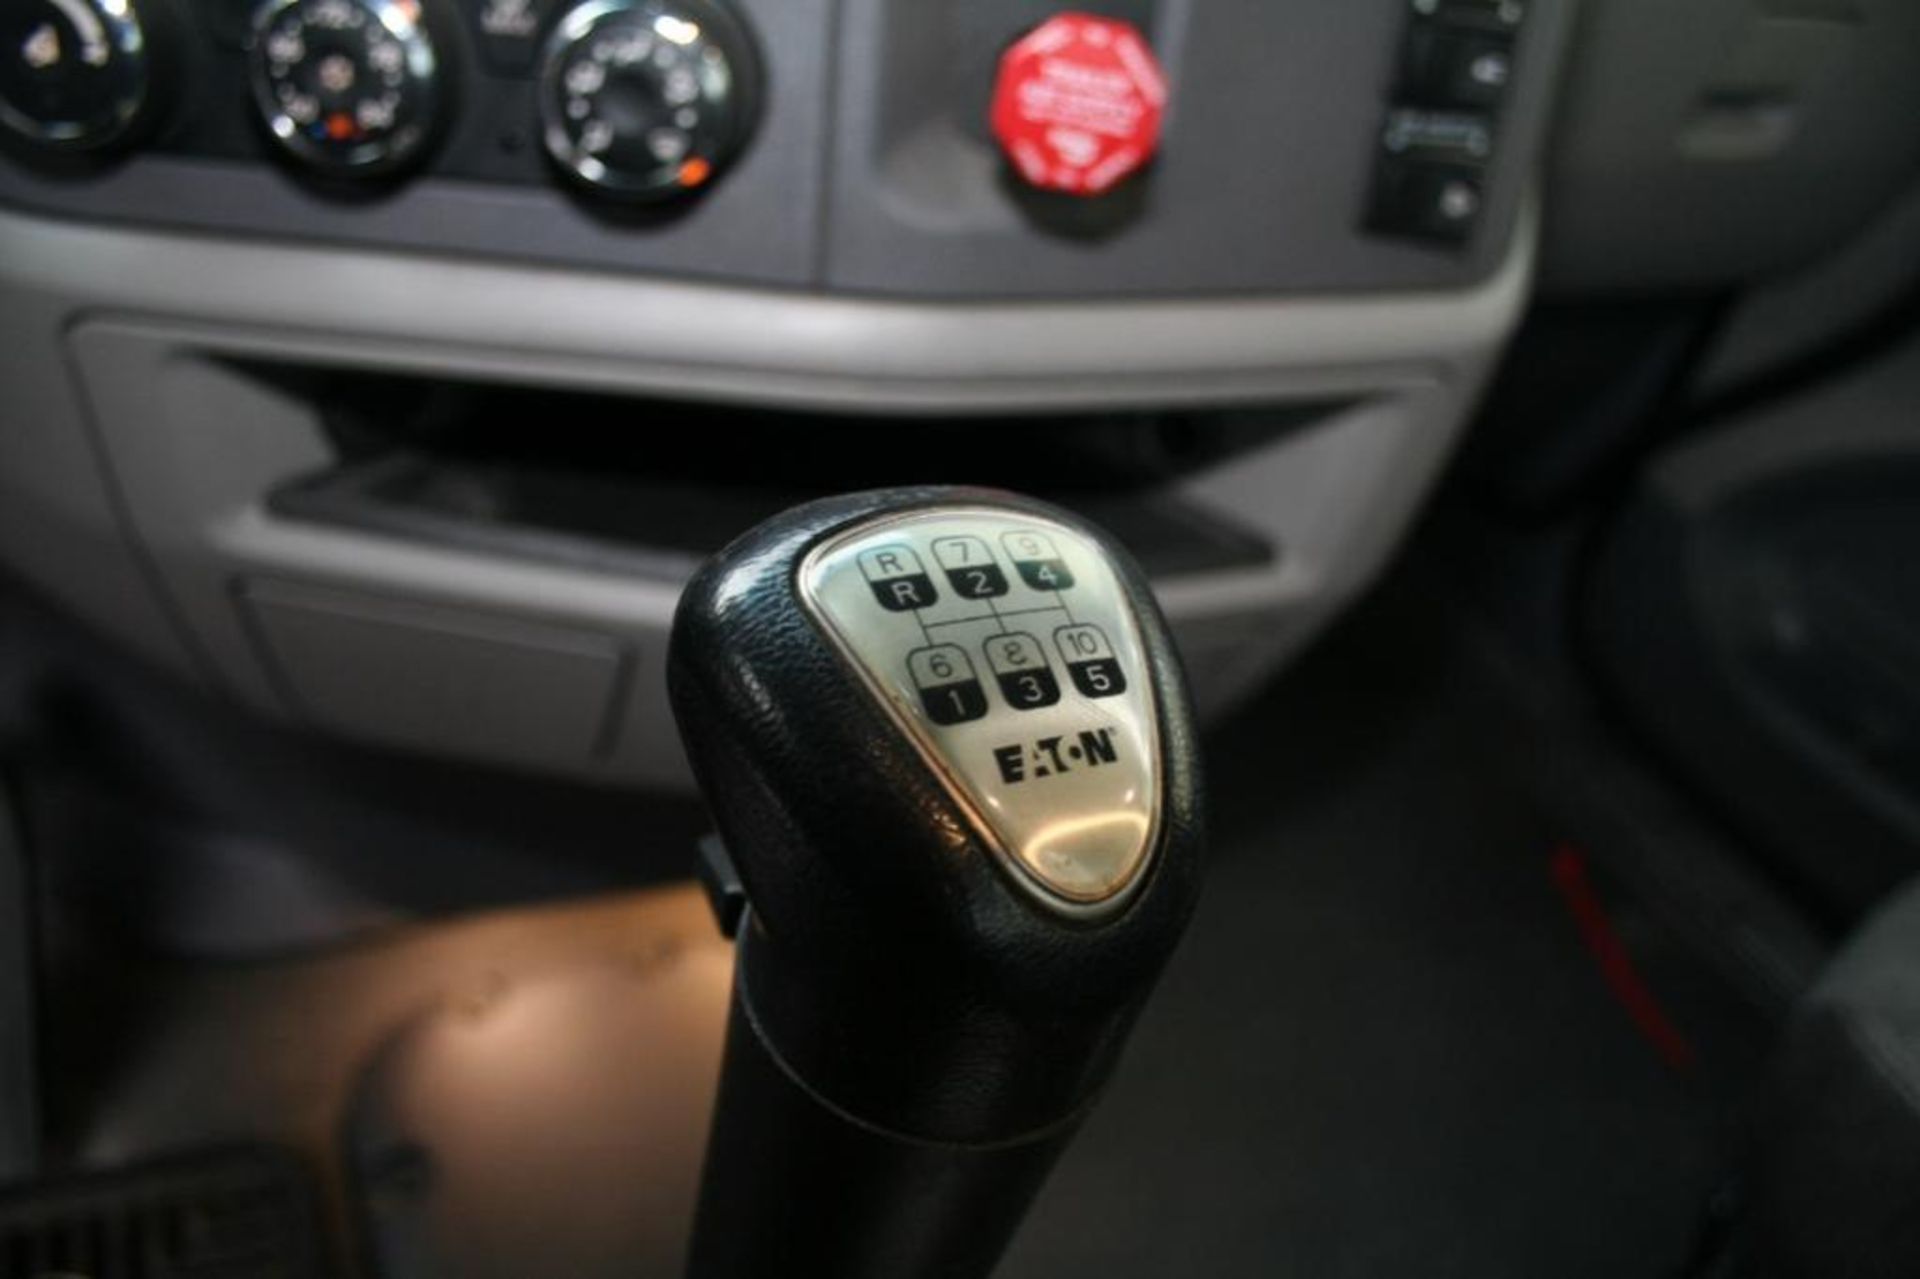 2016 Peterbilt 579 Day Cab, Cummins Engine, 10 Speed Transmission, VIN# 1XPBD79XGD301626, Appx 130,0 - Image 9 of 11